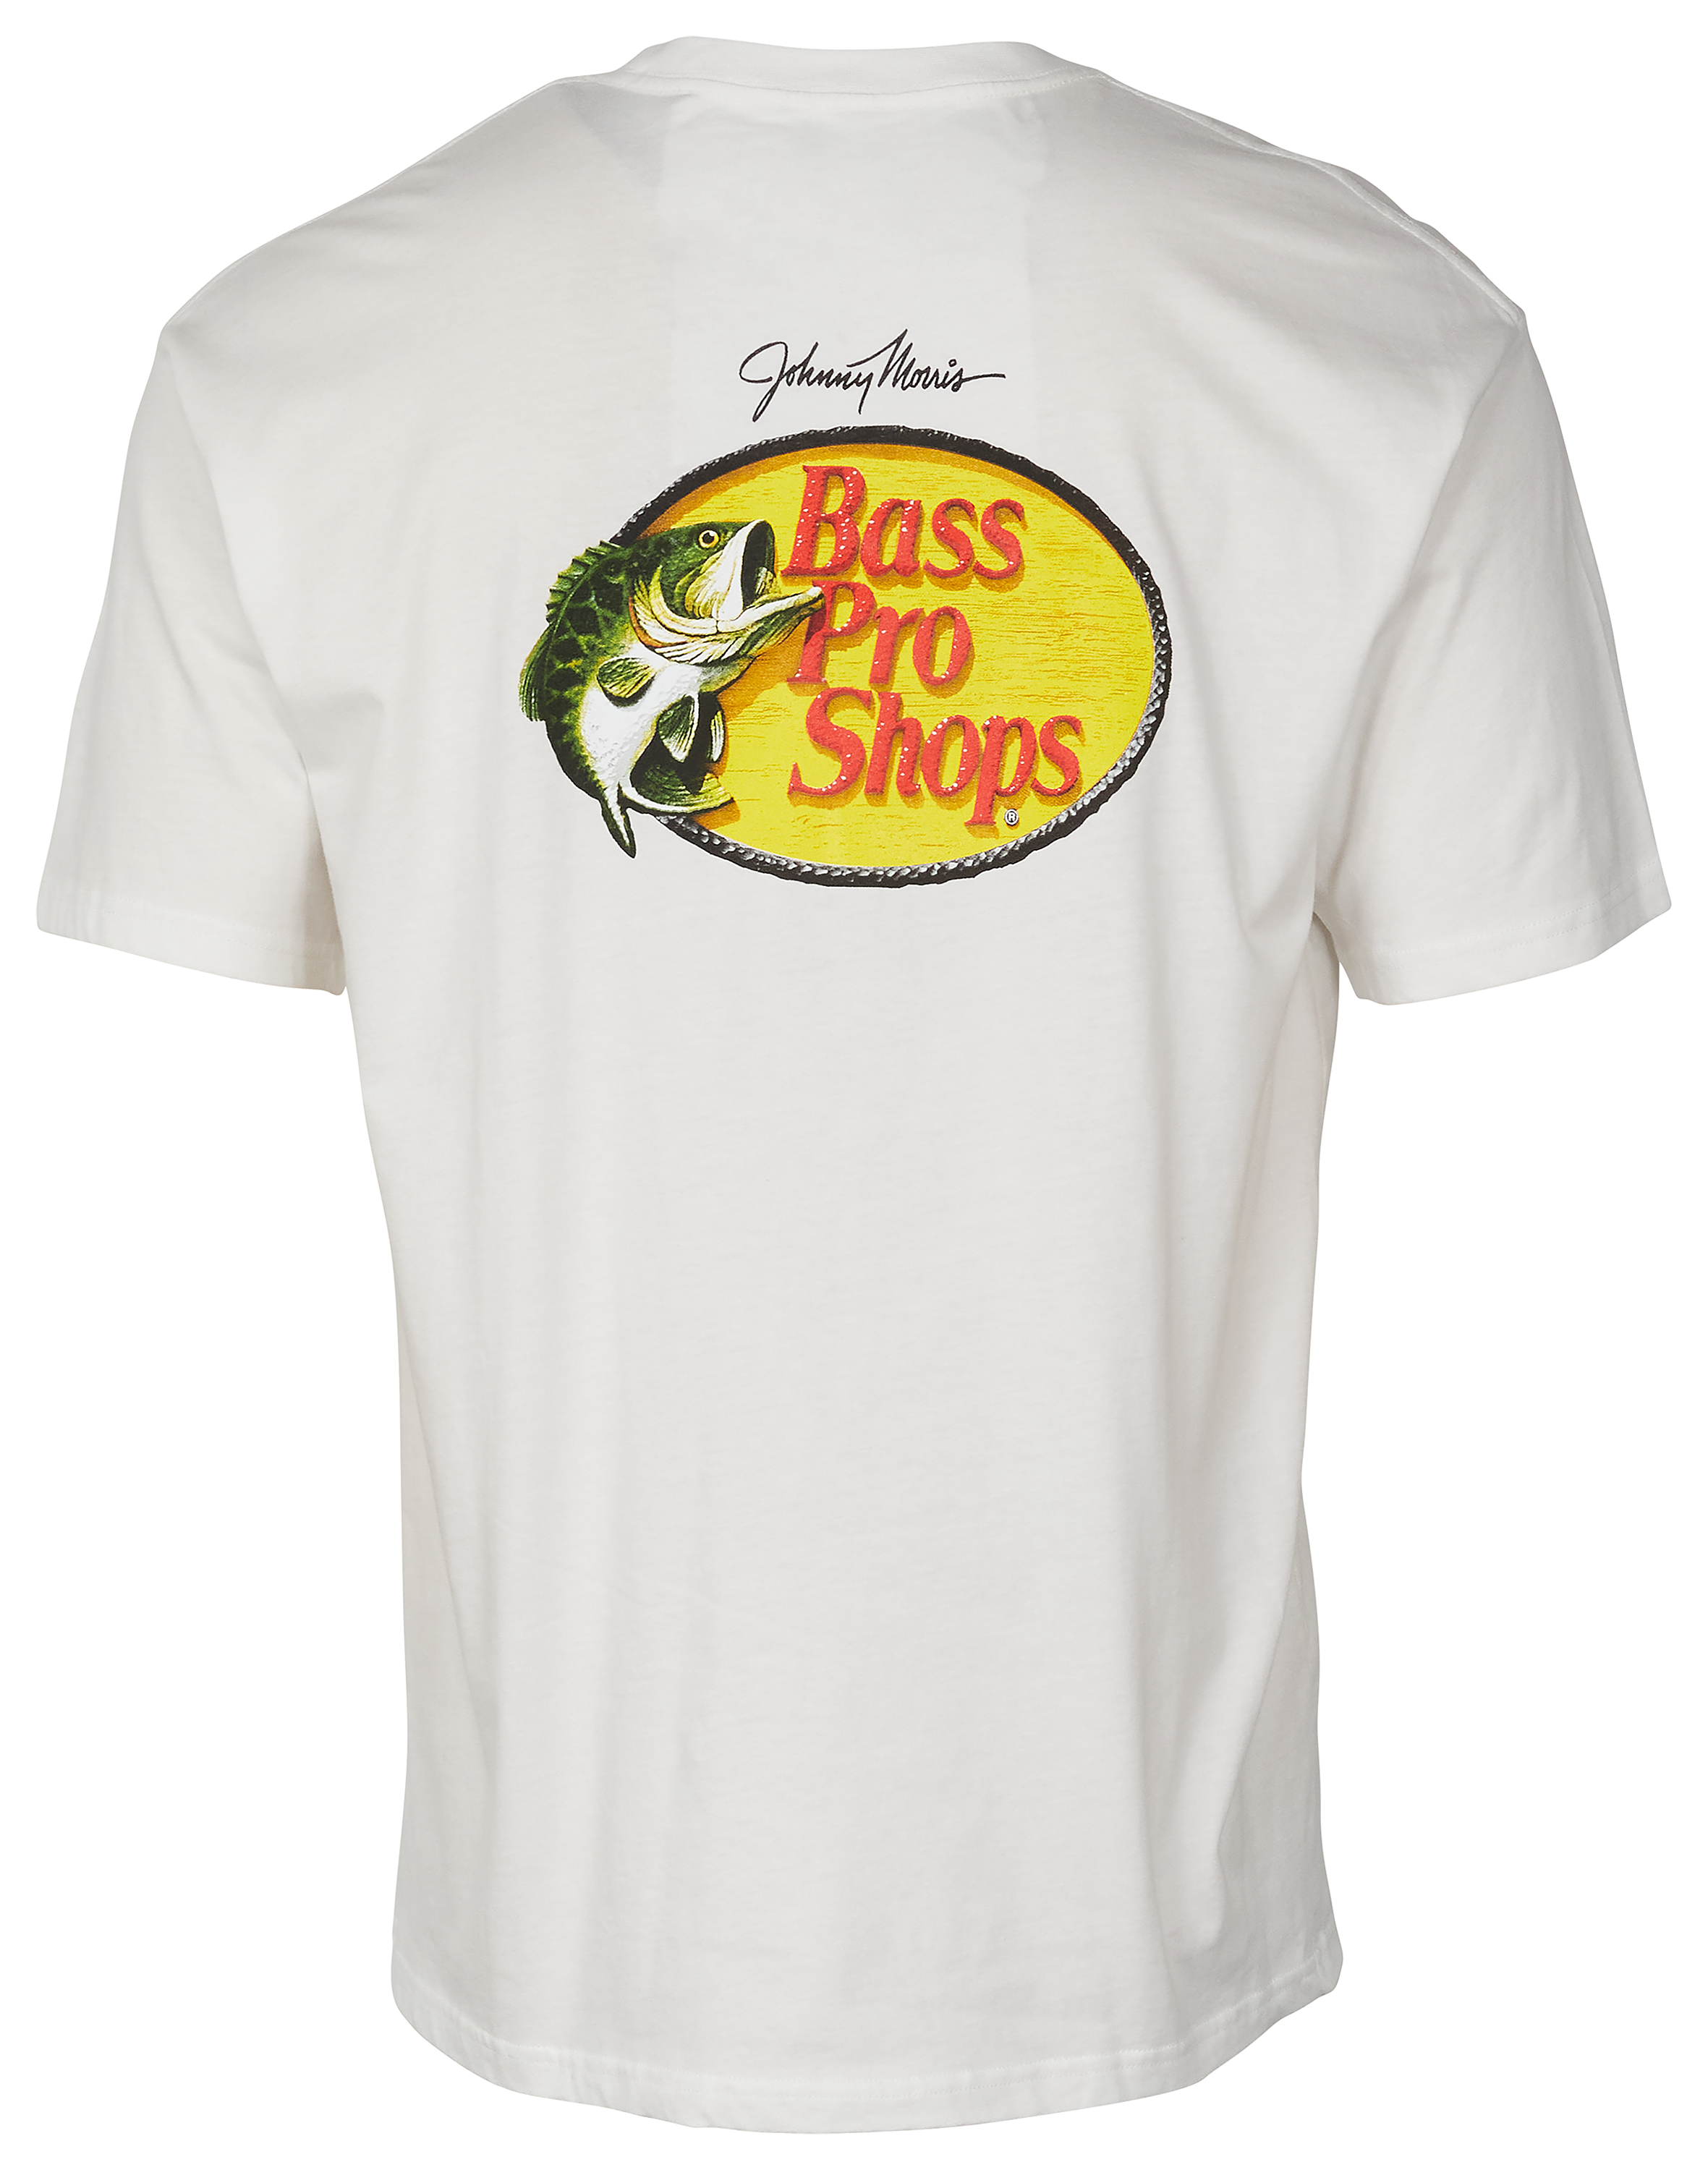 Bass Pro Shops T Shirt Mens Adult Size XL Gray Graphic Tee Short Sleeve